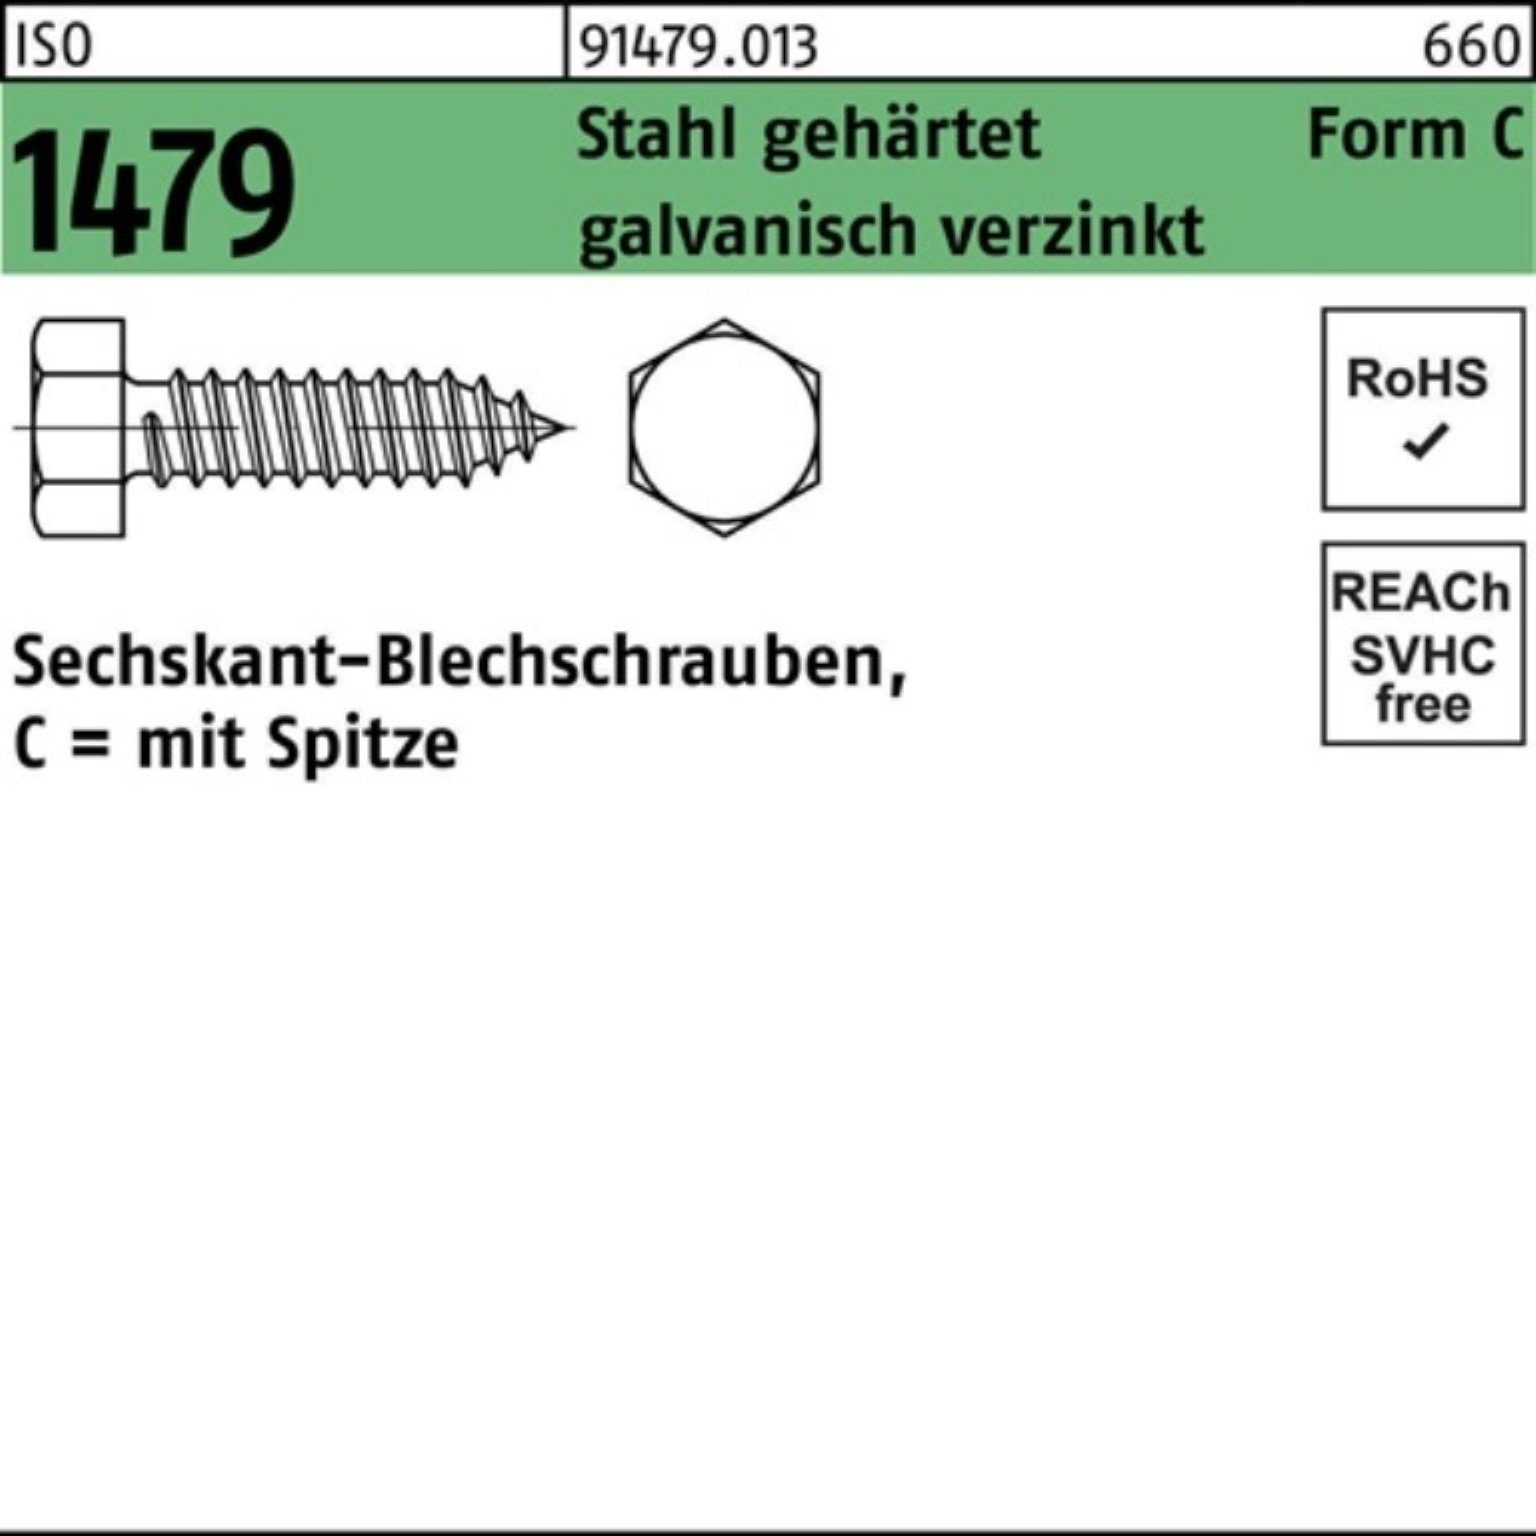 C Blechschraube Blechschraube 1479 Reyher Spitze/6-kt g ISO 8x25 250er gehärtet Stahl Pack